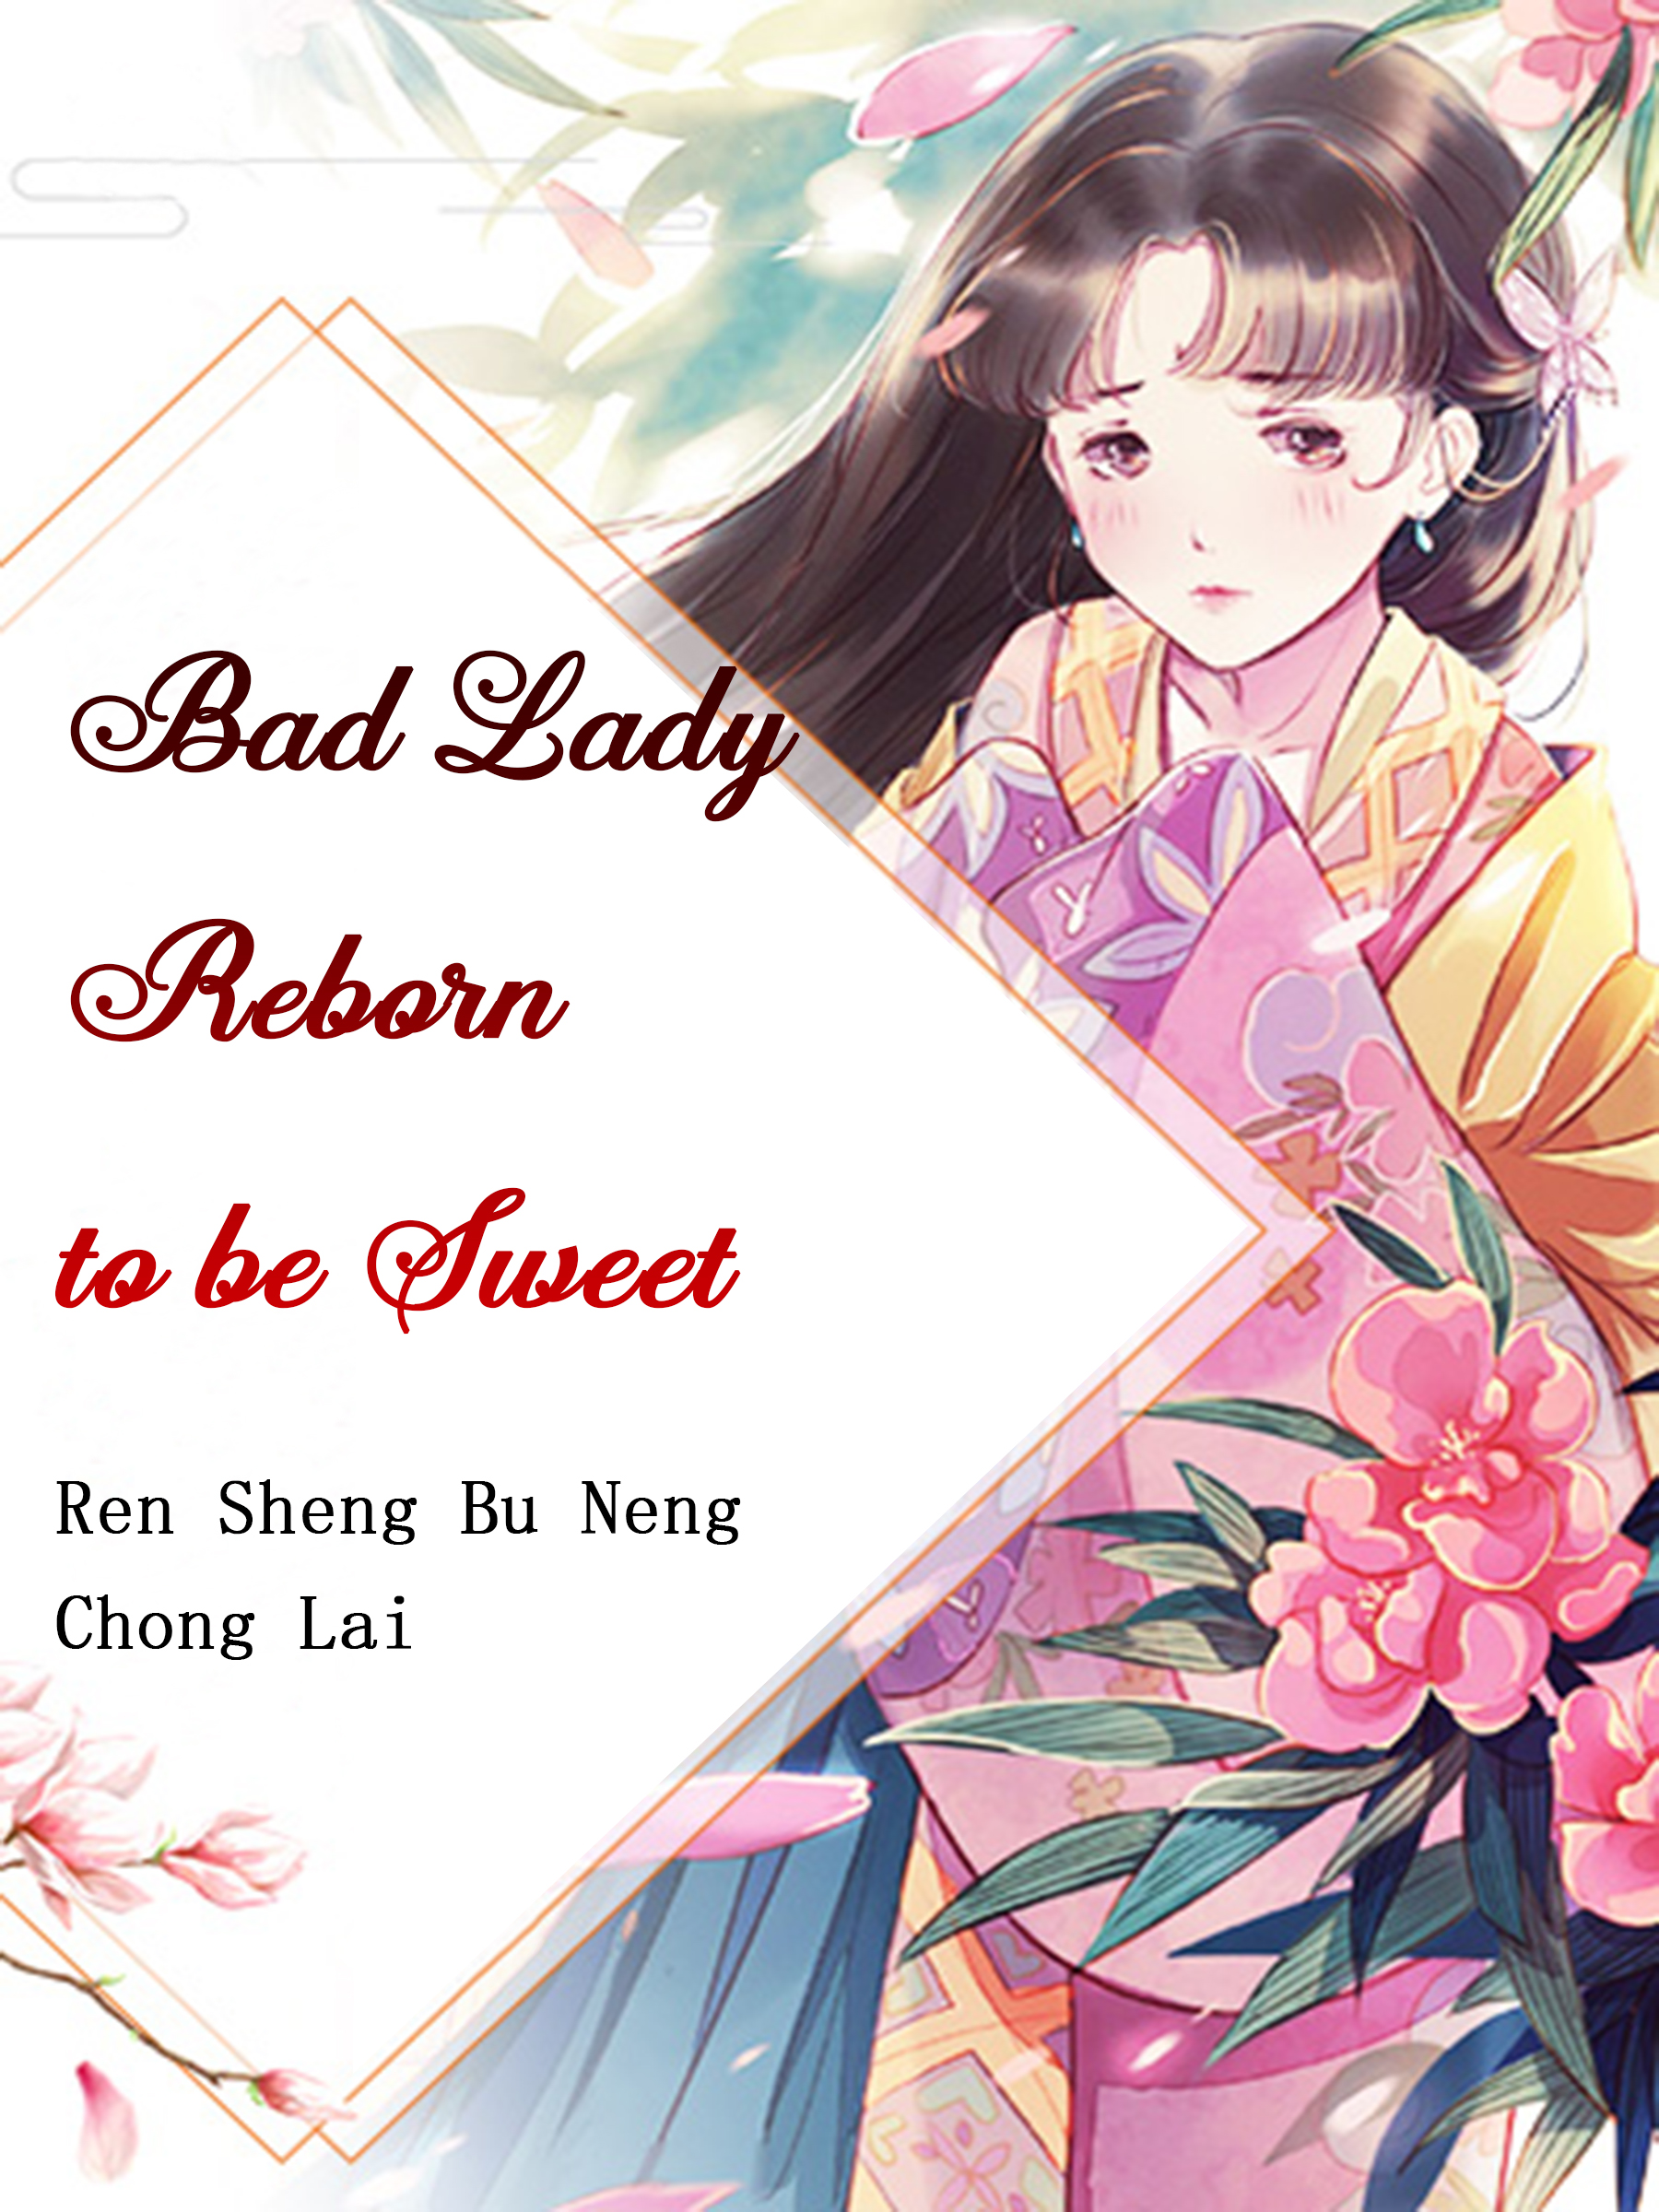 Bad Lady Reborn to be Sweet Novel Full Story | Book - BabelNovel